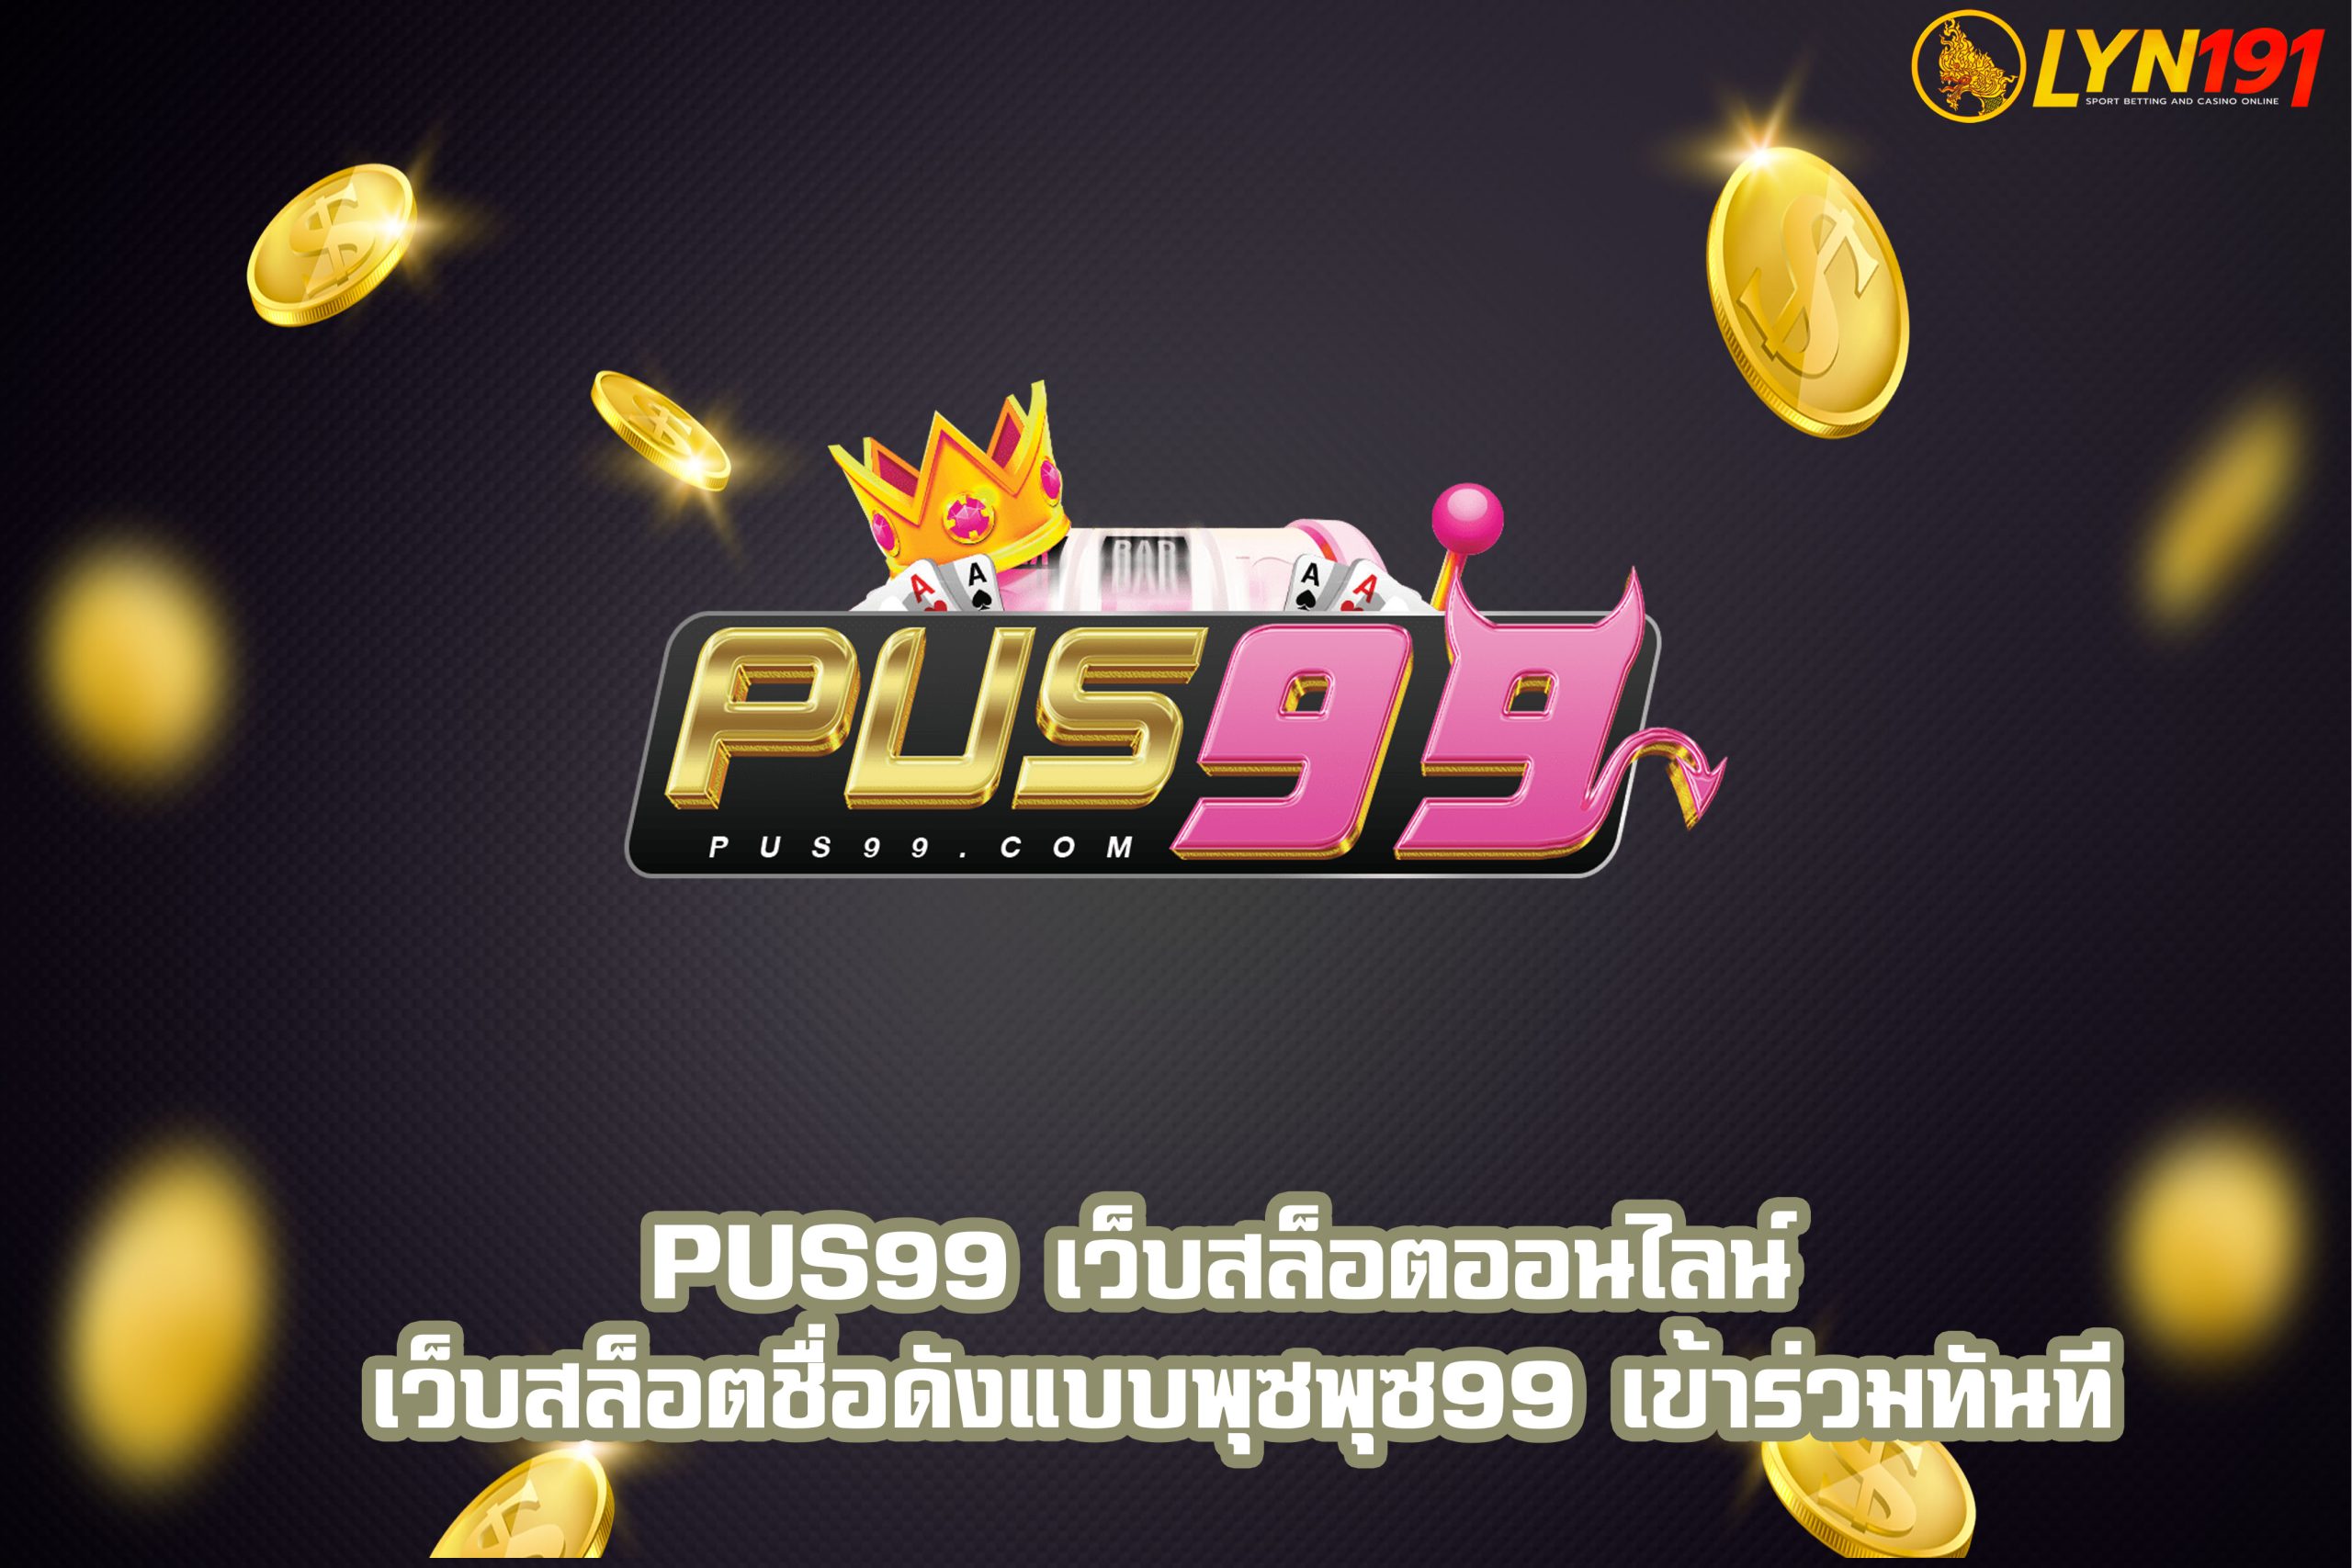 Pus99 เว็บสล็อตออนไลน์ เว็บสล็อตชื่อดังแบบพุซพุซ99 เข้าร่วมทันที